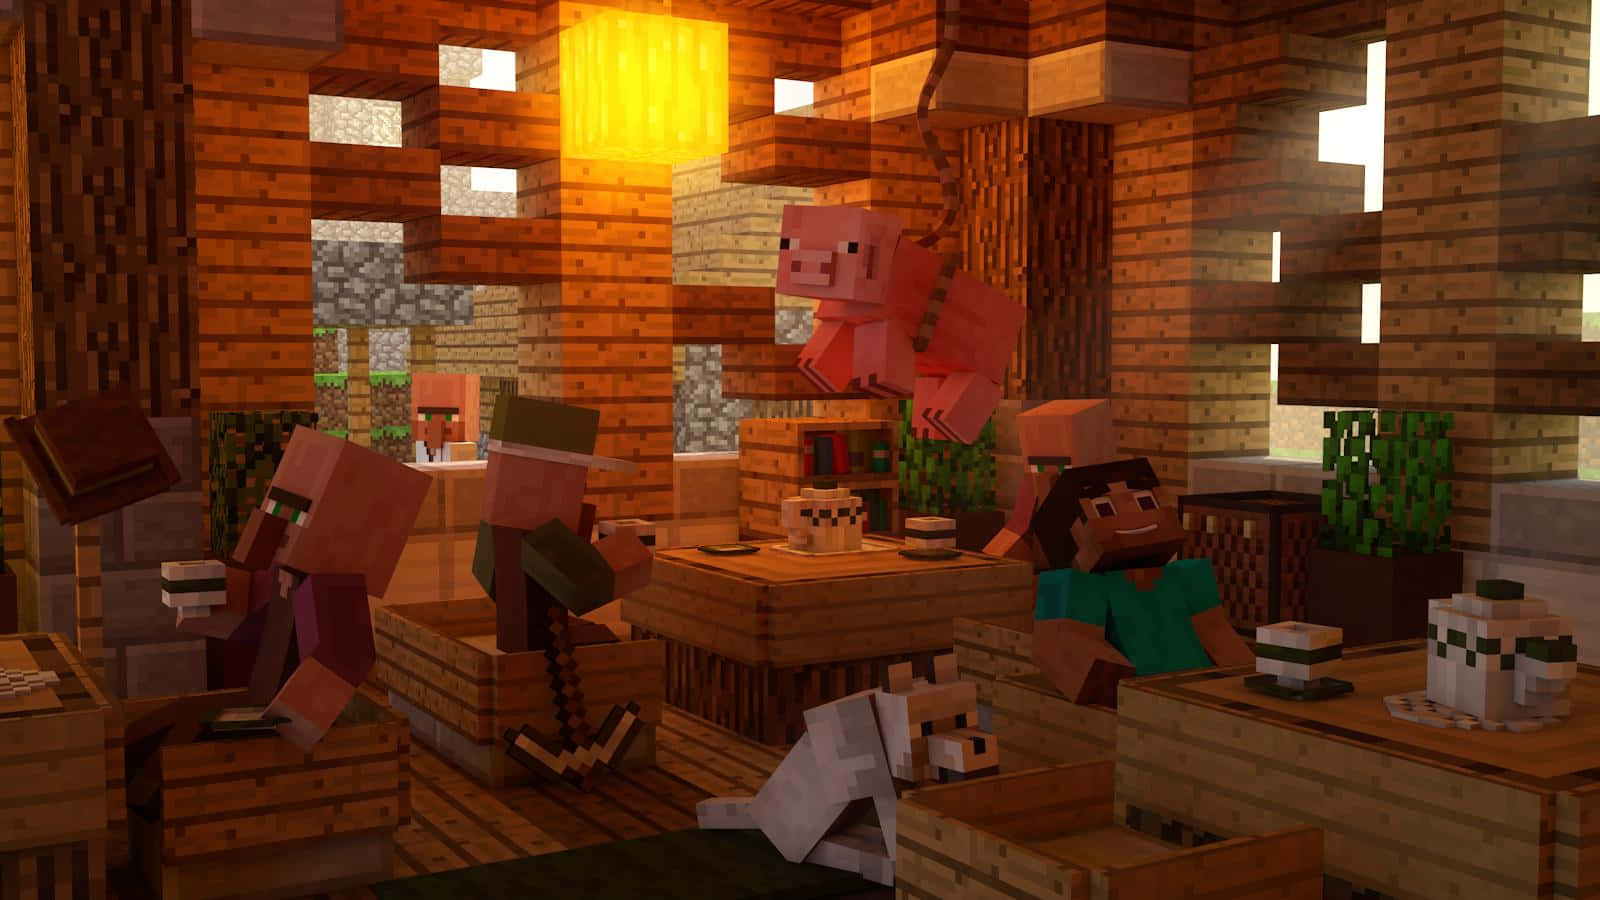 A Minecraft Villager exploring the stunning Block World Wallpaper